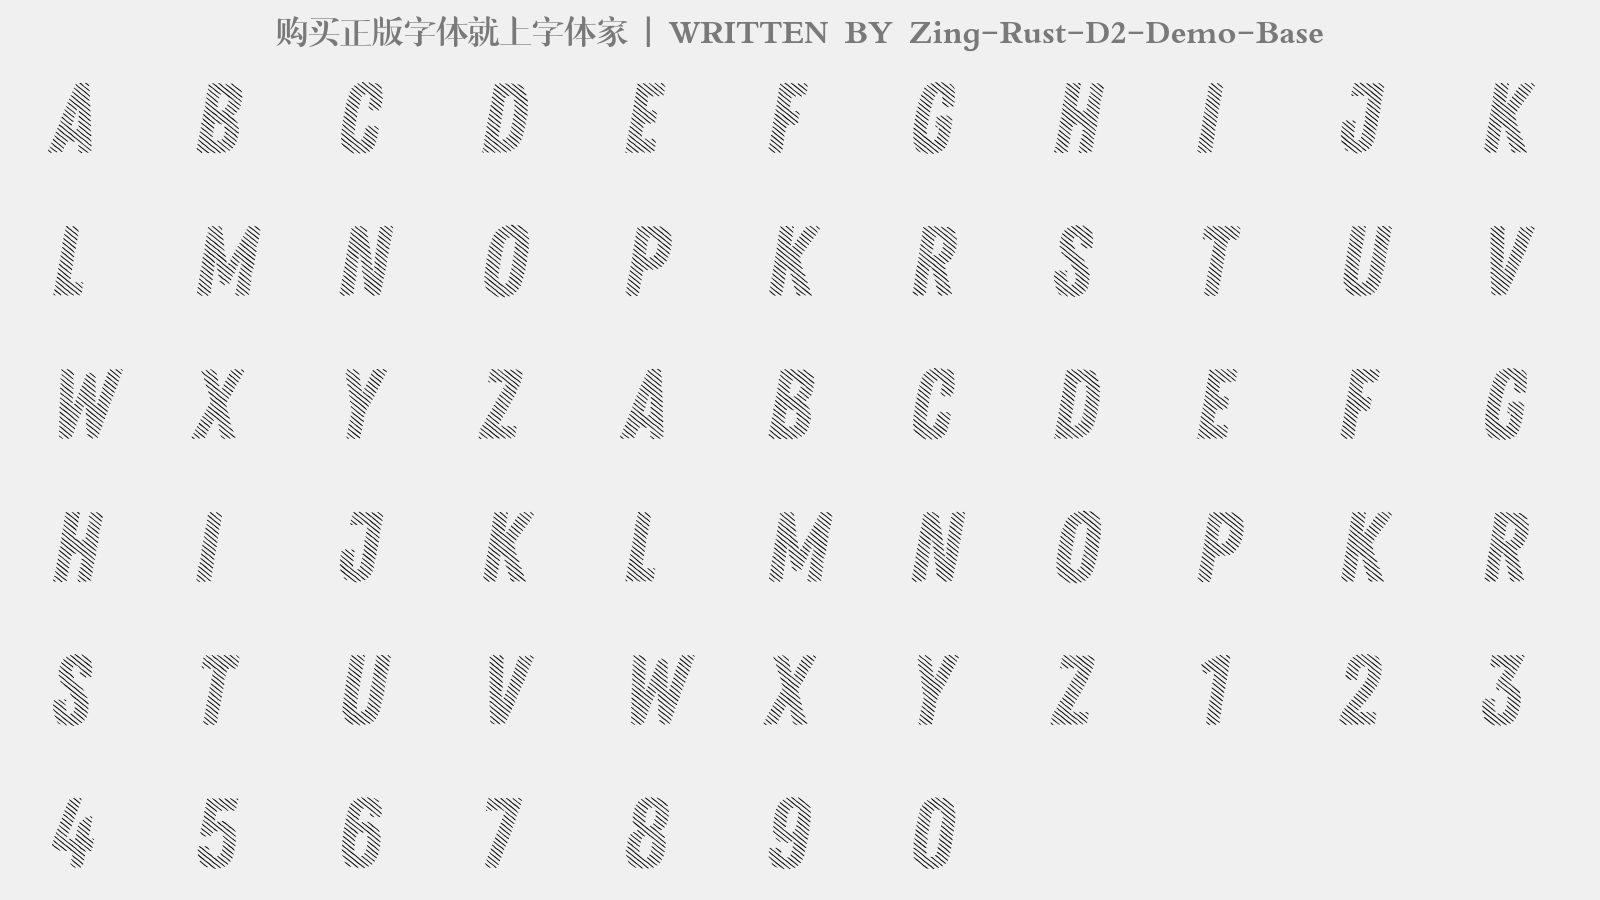 Zing-Rust-D2-Demo-Base - 大写字母/小写字母/数字